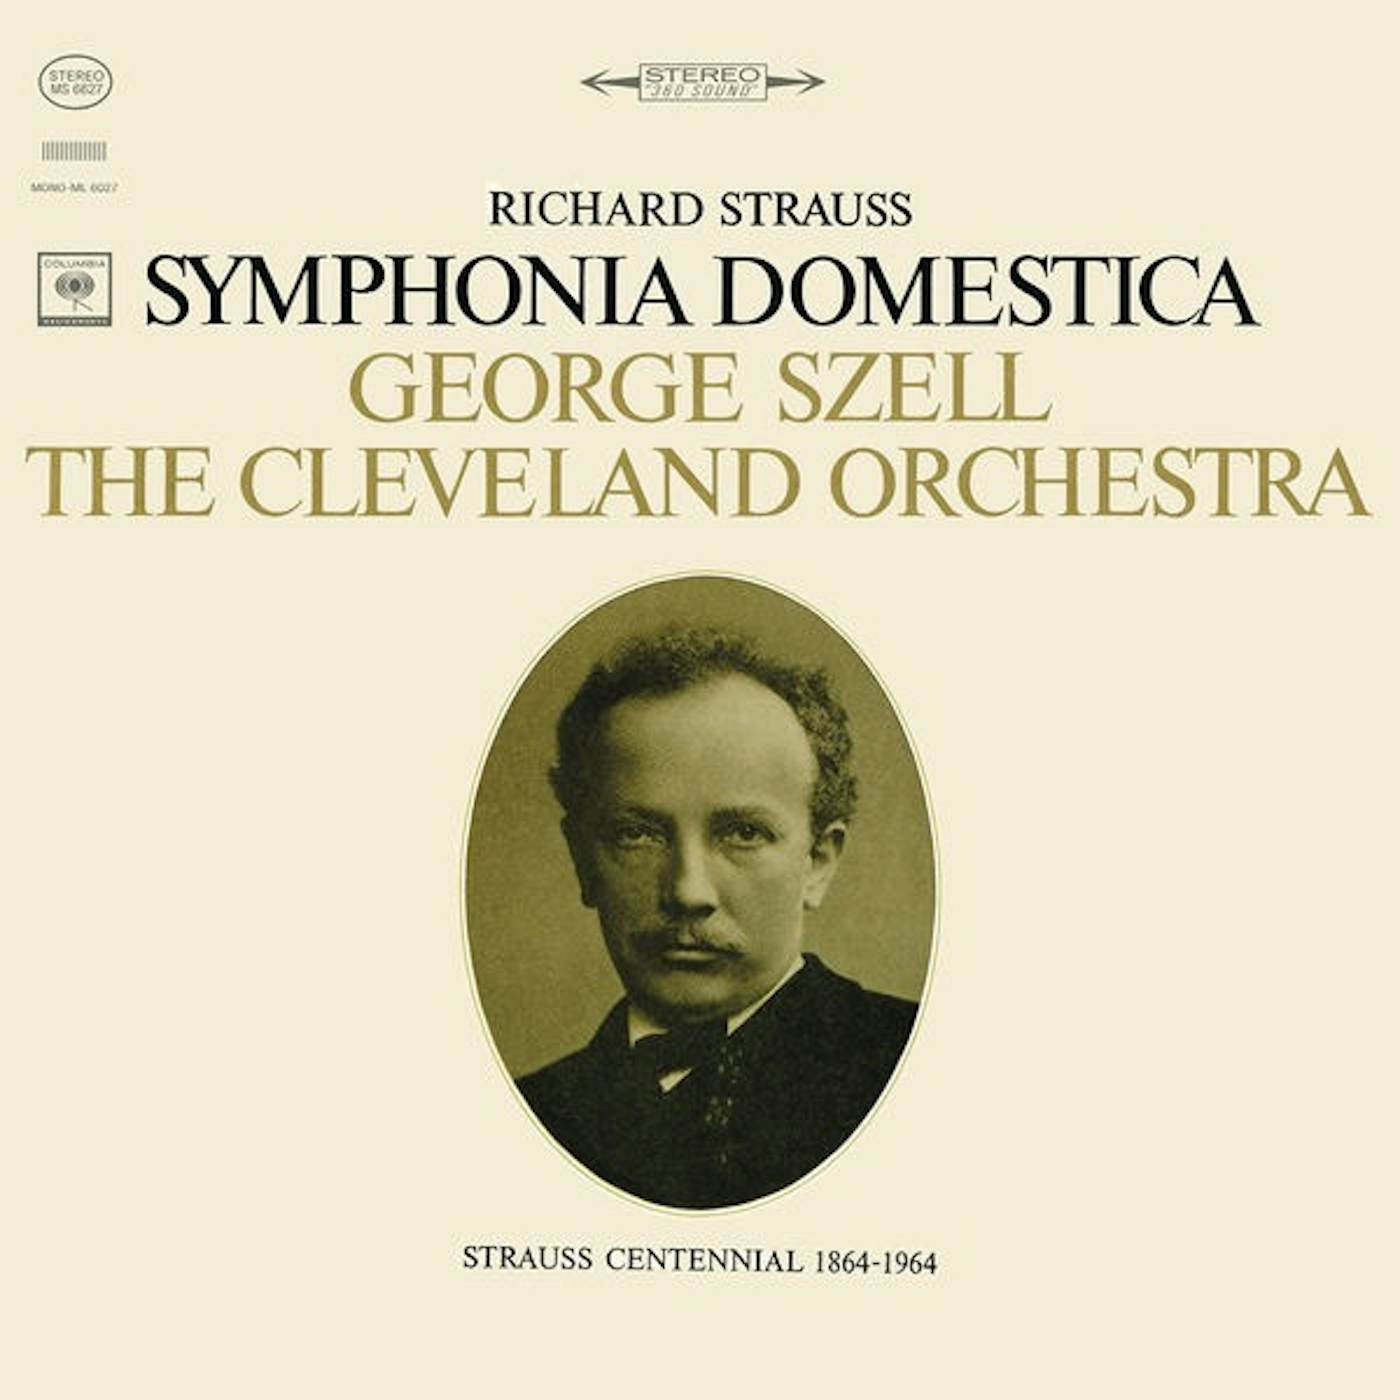 George Szell Strauss: Symphonia Domestica Vinyl Record